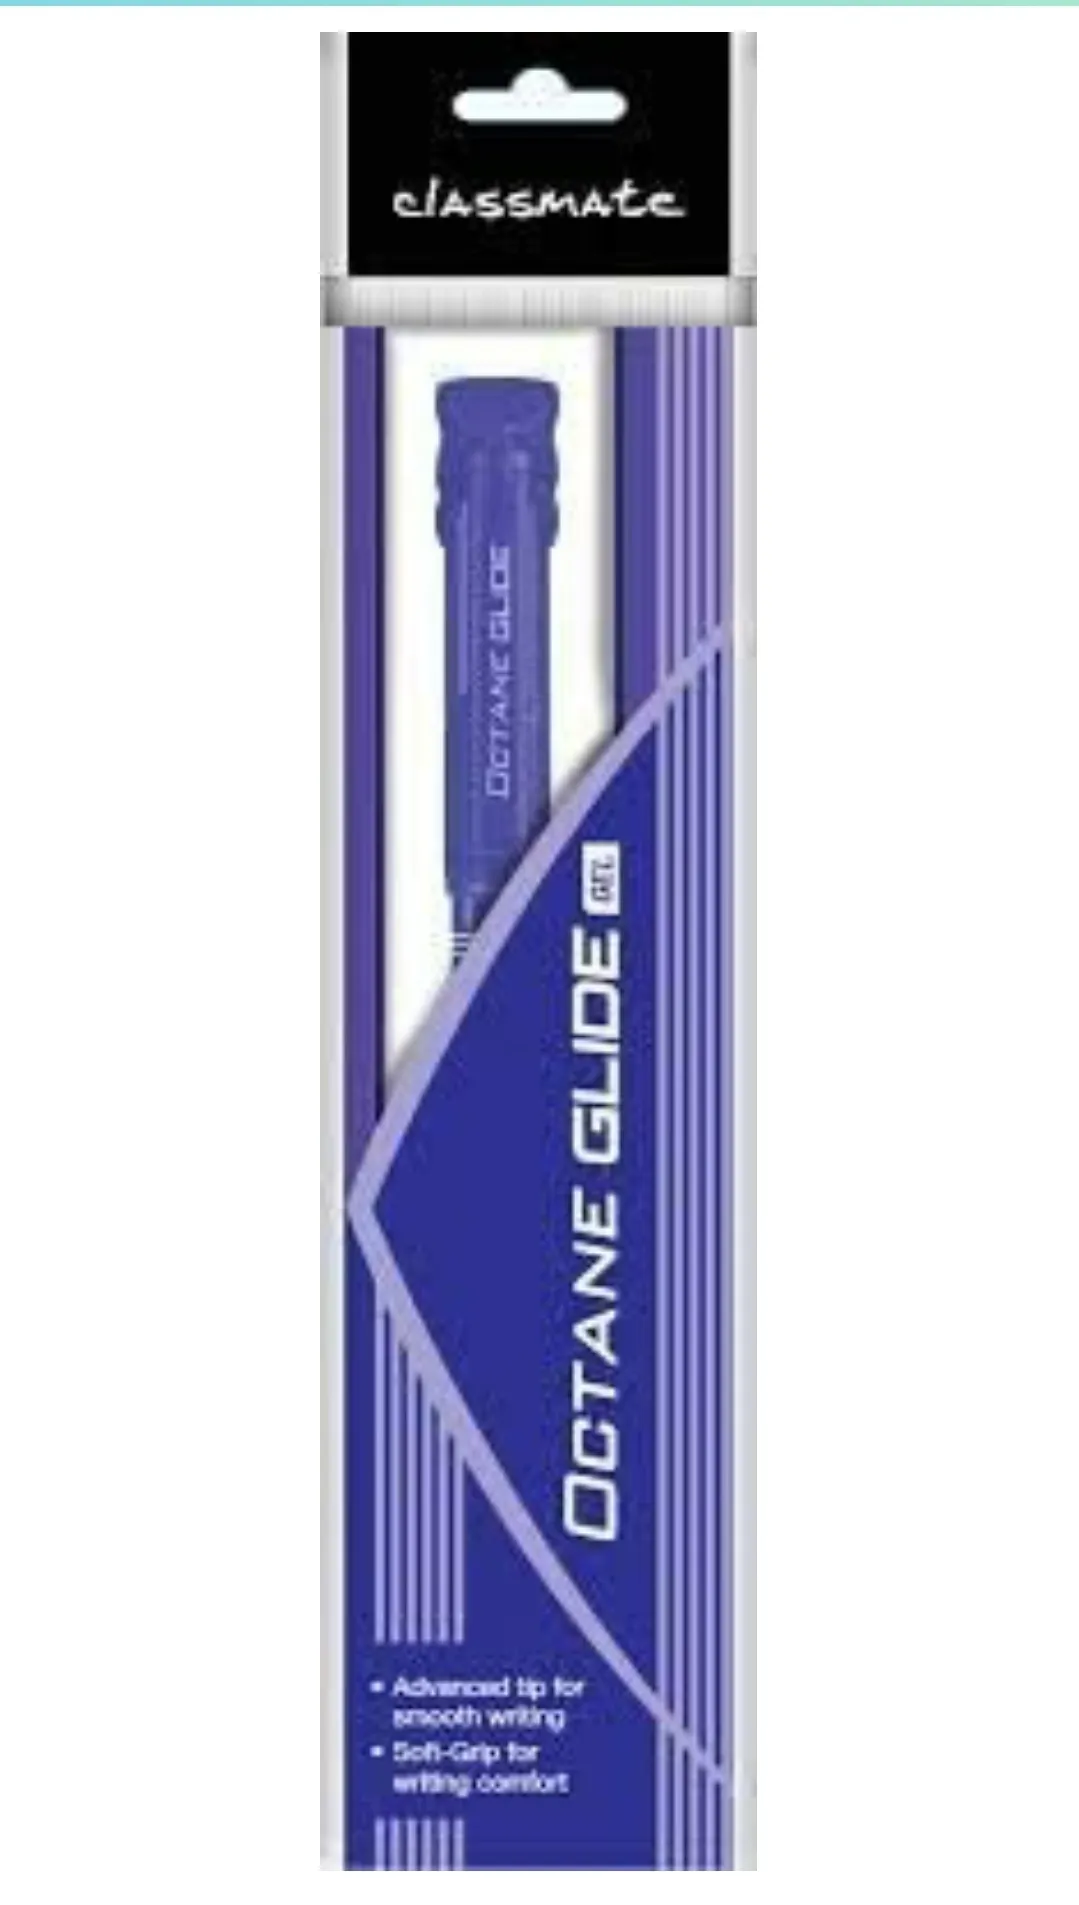 Classmate Octane Glide Gel- Blue Pen, Pack of 10 pens